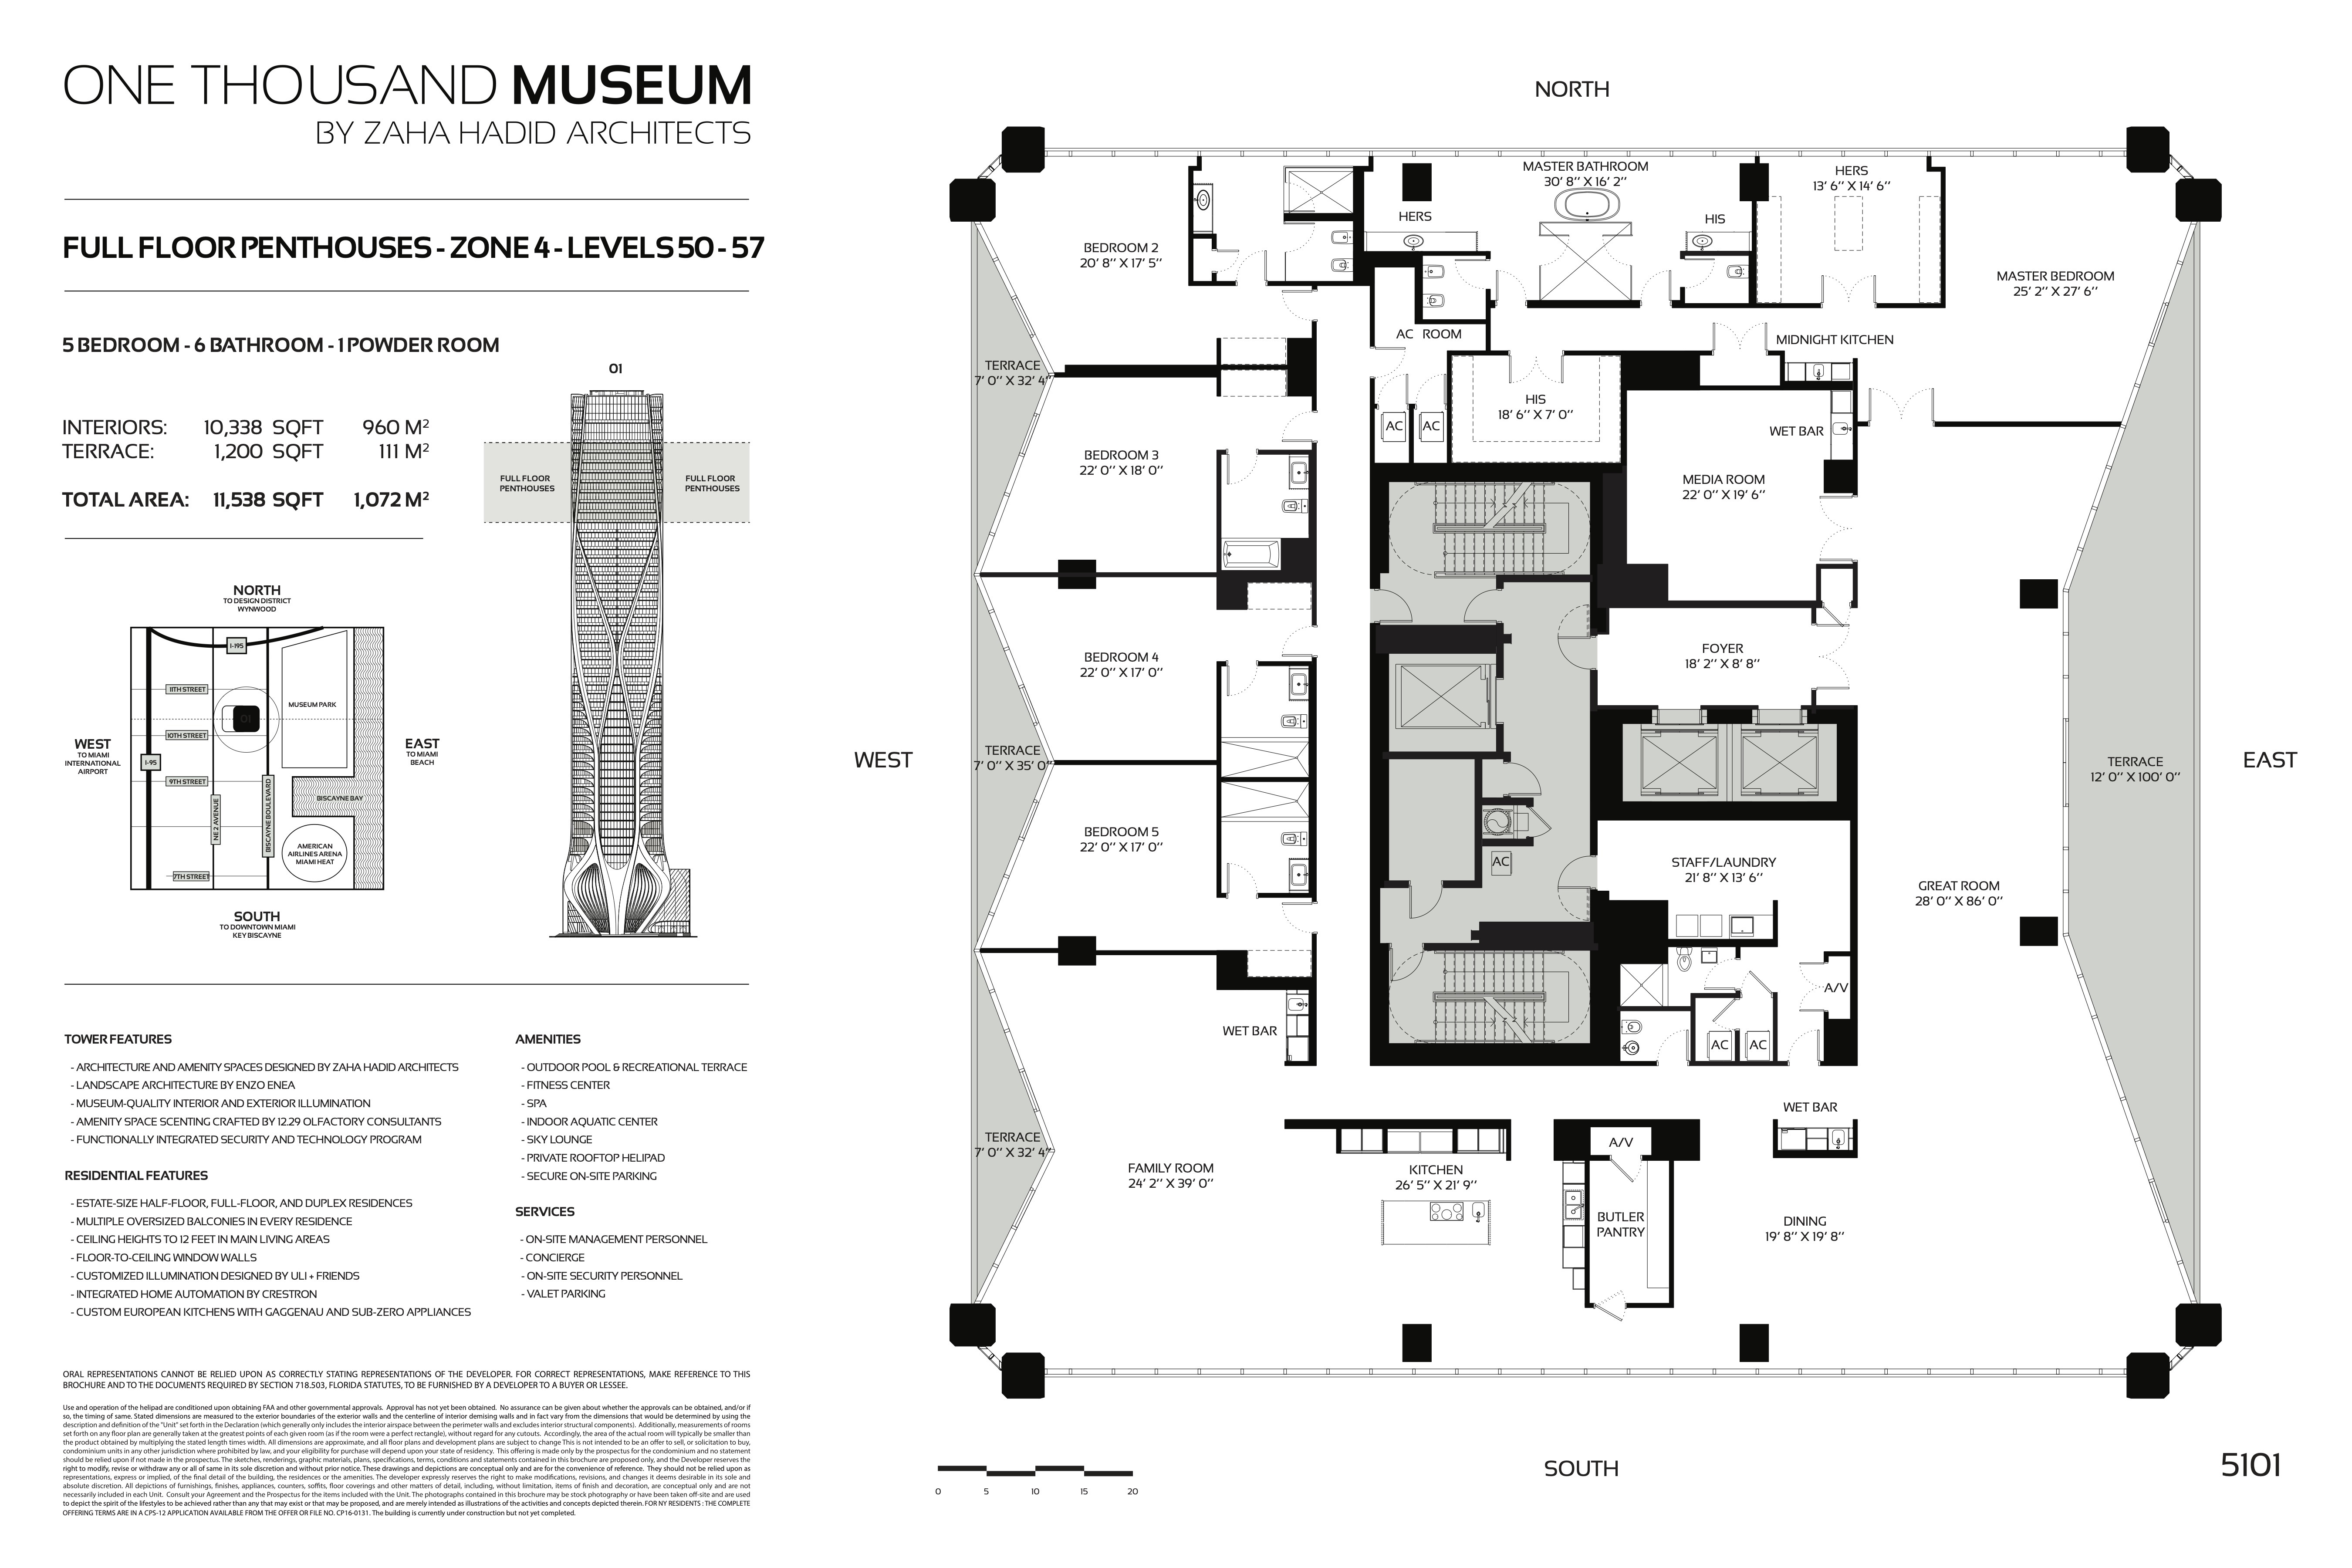 Floor Plan for 1000 Museum Miami Floorplans, Full Floor Penthouse Zone 4